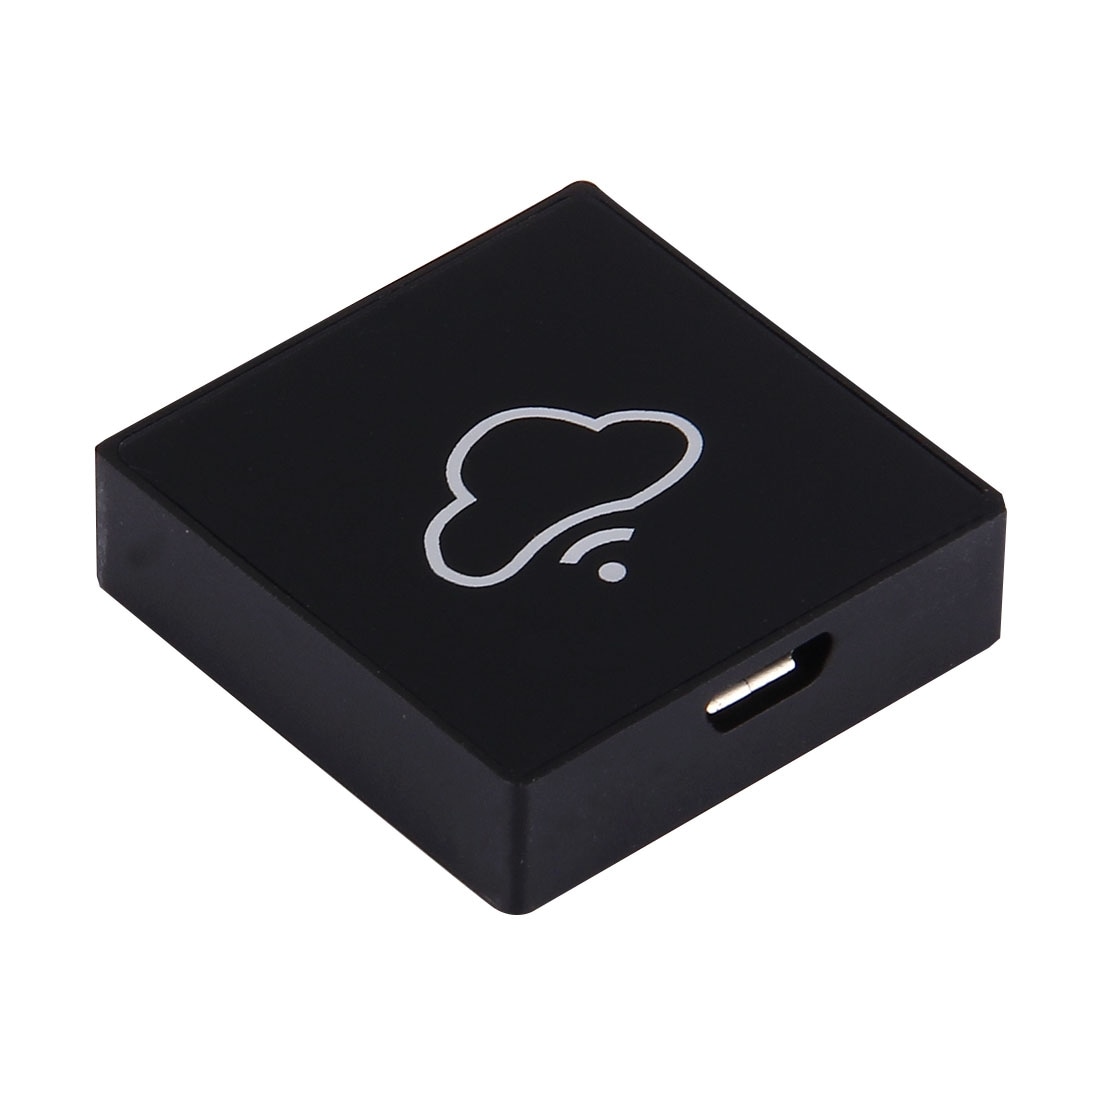 BOX ONE Mini WiFi Trådlös hårddisk för IOS / Android